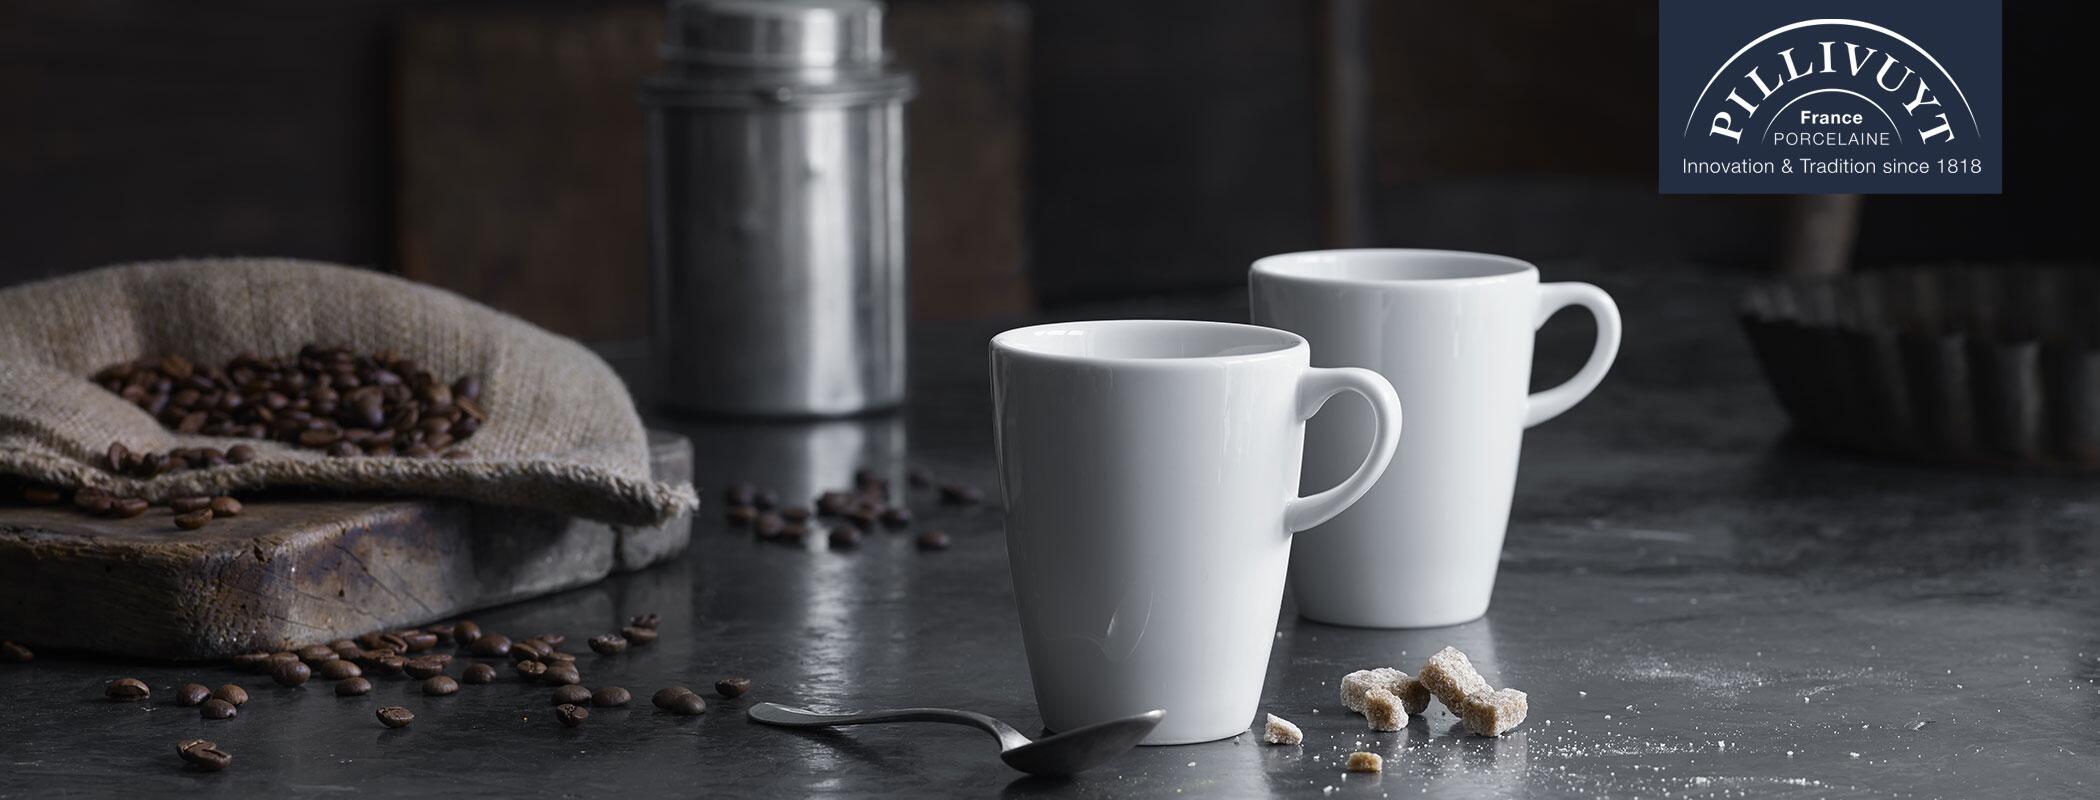 Pillivuyt Tassen - Halten Tee, Kaffee oder Kakao länger warm